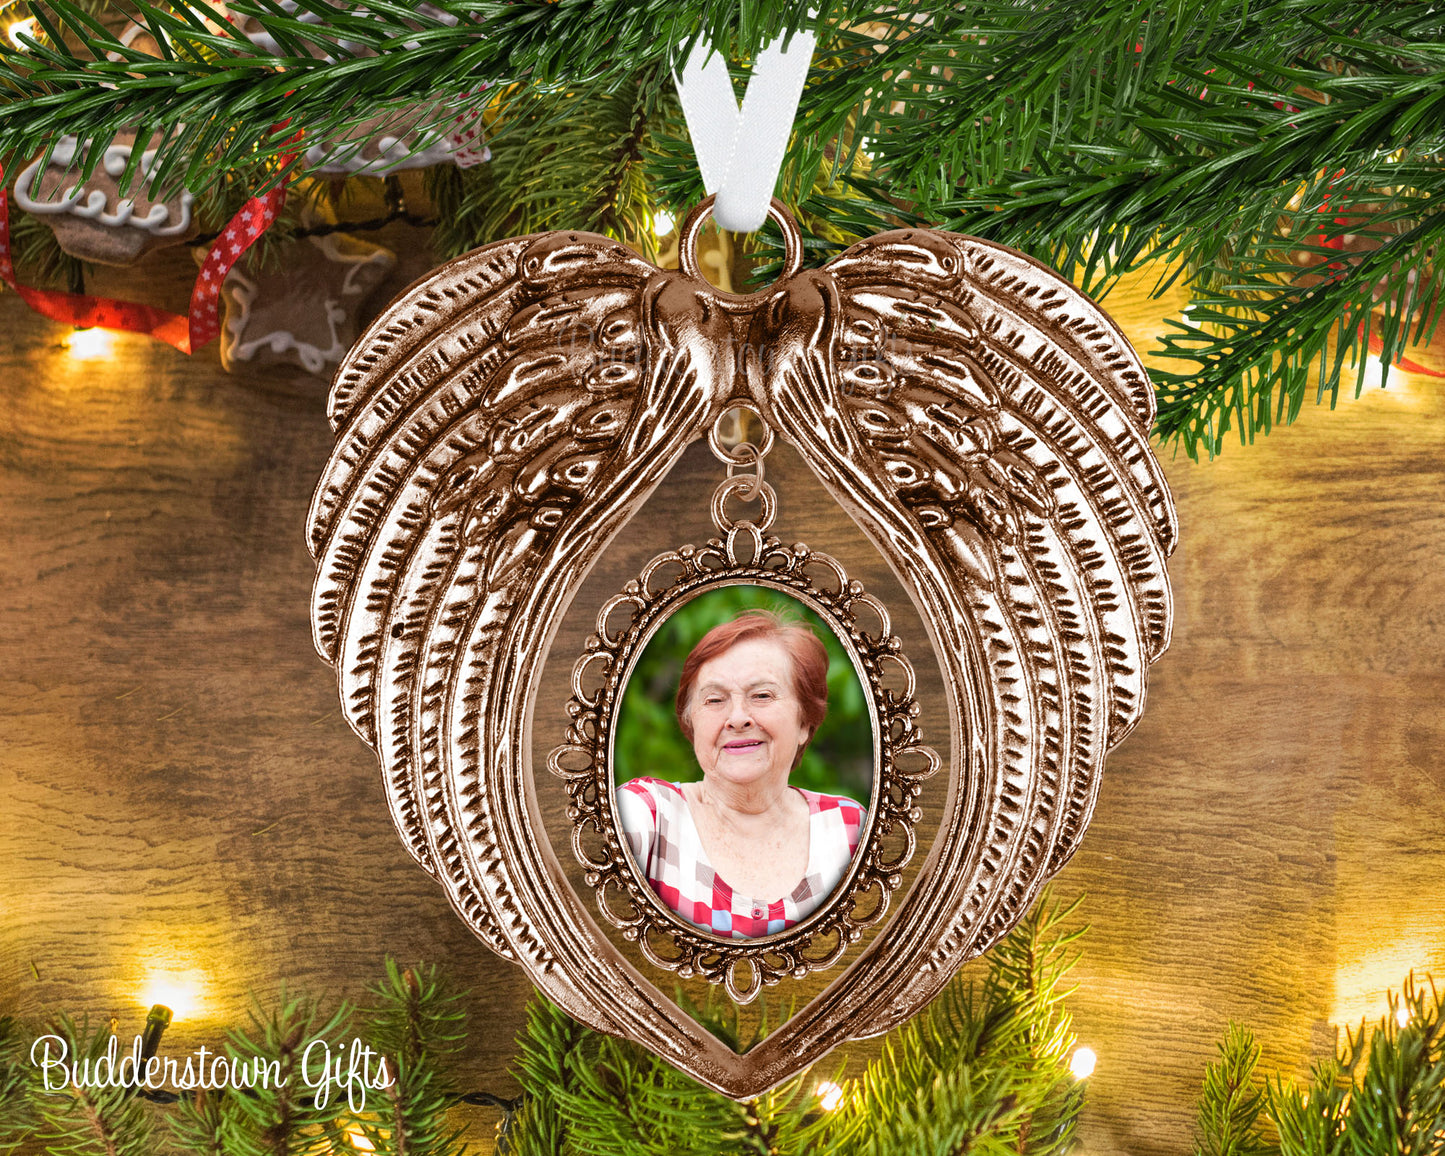 Angel Wings Photo Ornament  - 2 colors - Pet memorial, pet ornament, loss of a loved one, memorial ornament, sympathy gift, angel